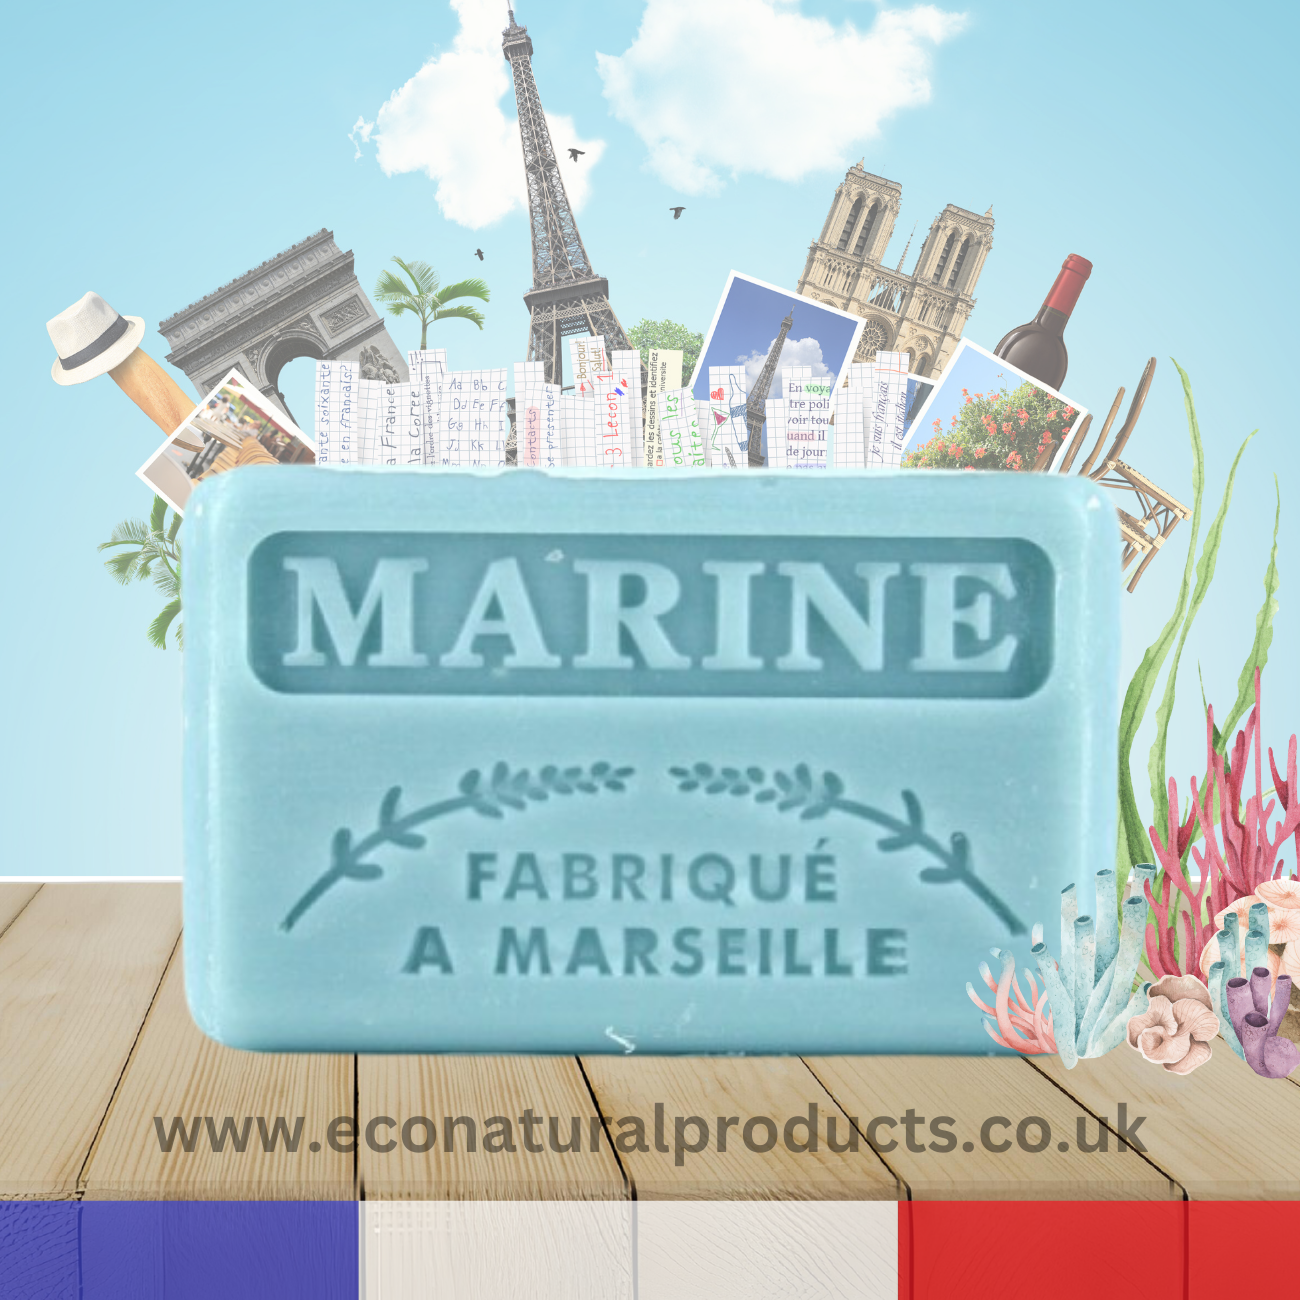 French Marseille Soap Marine (Navy) 125g